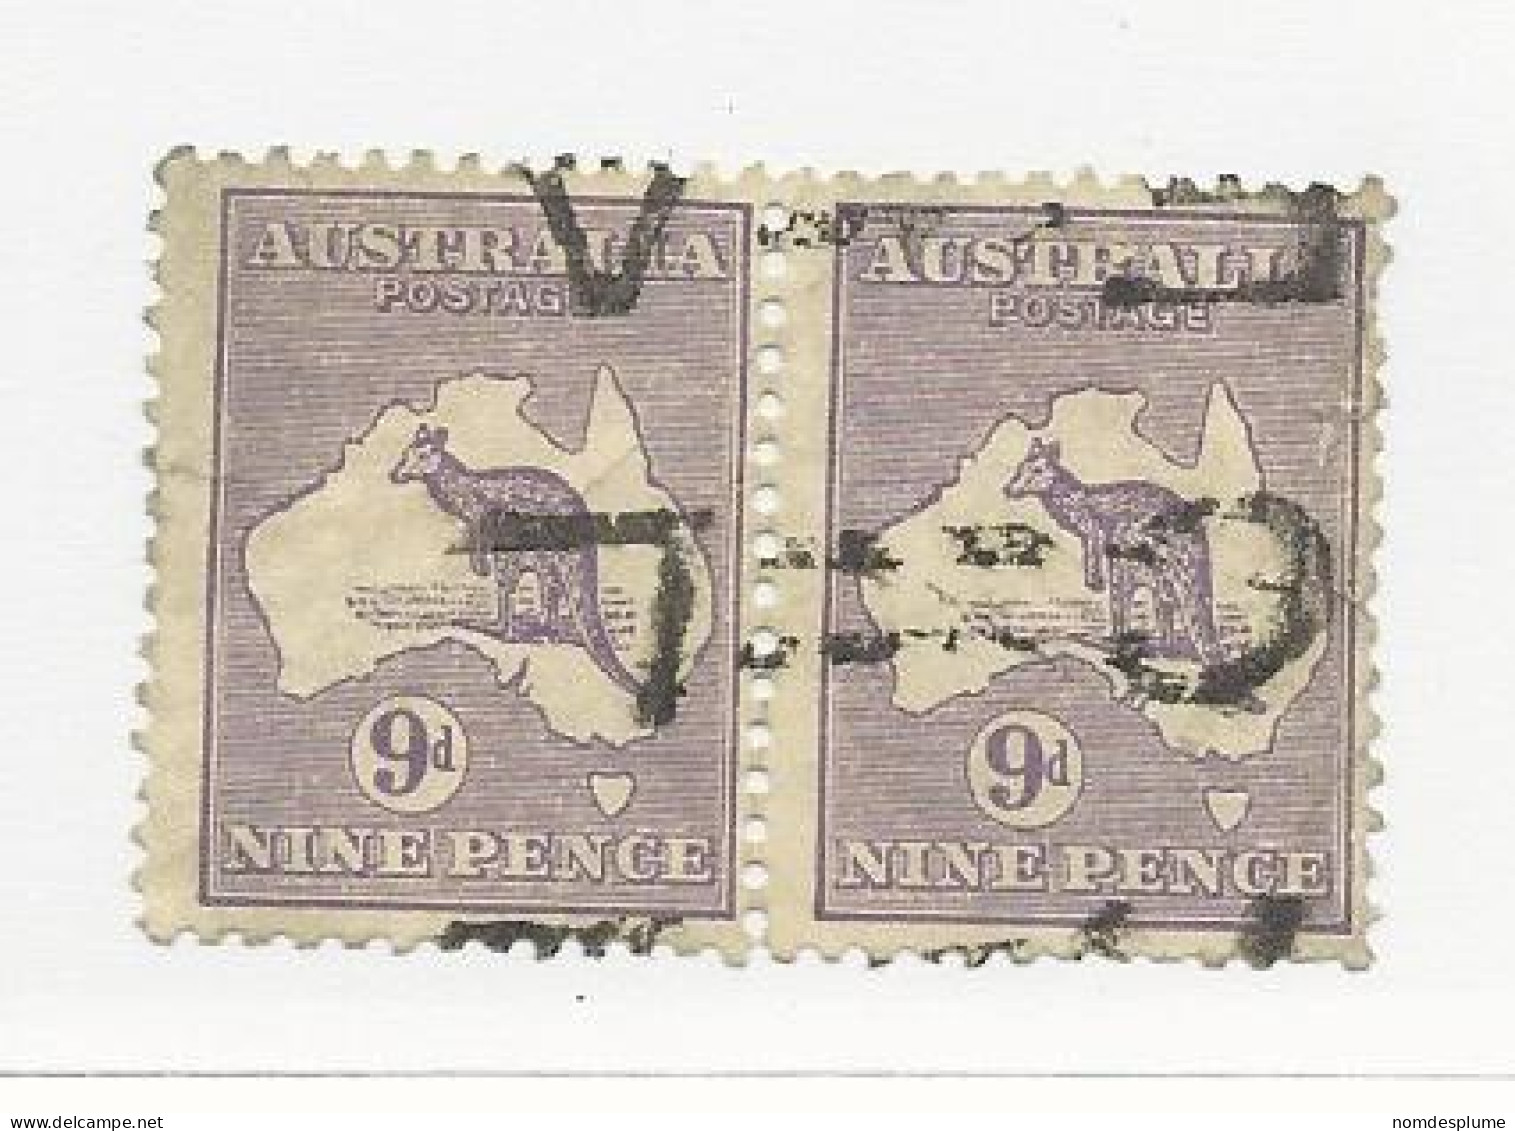 27236 ) Australia 1929 Small Crown A Multi Watermark - Gebraucht